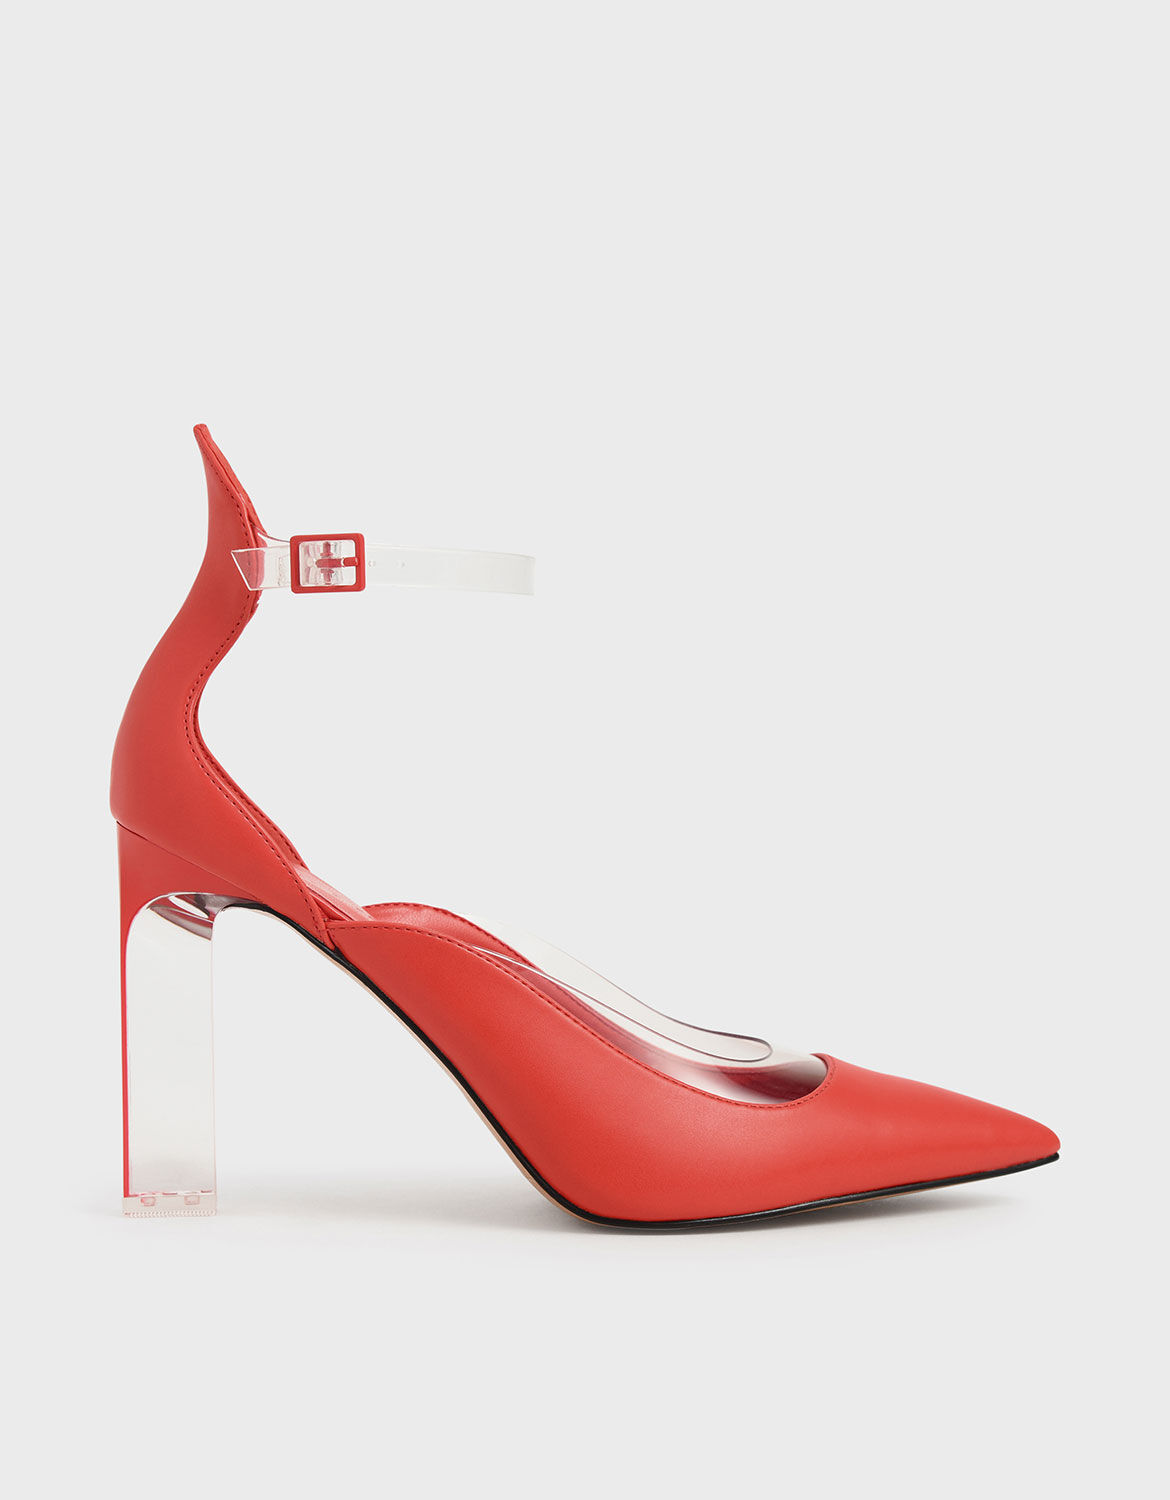 red pump heels